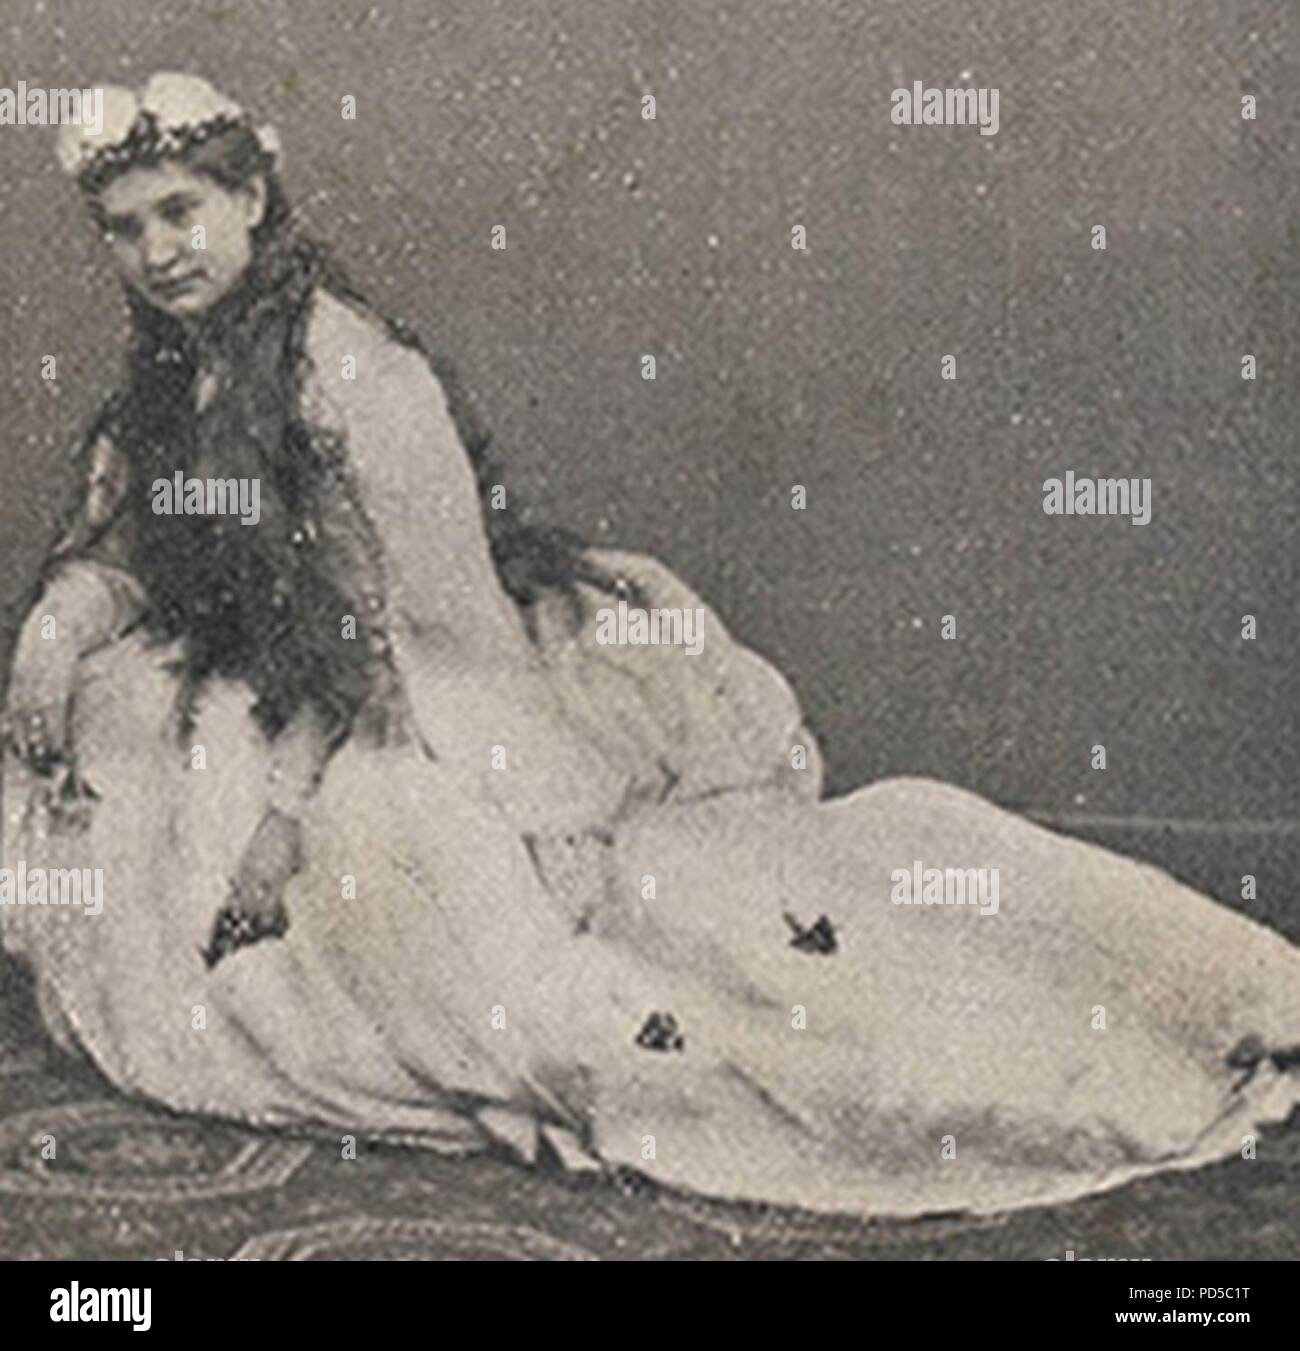 Amleto-1871-Angiolina Ortolani-Tiberini as Ophelia. Stock Photo